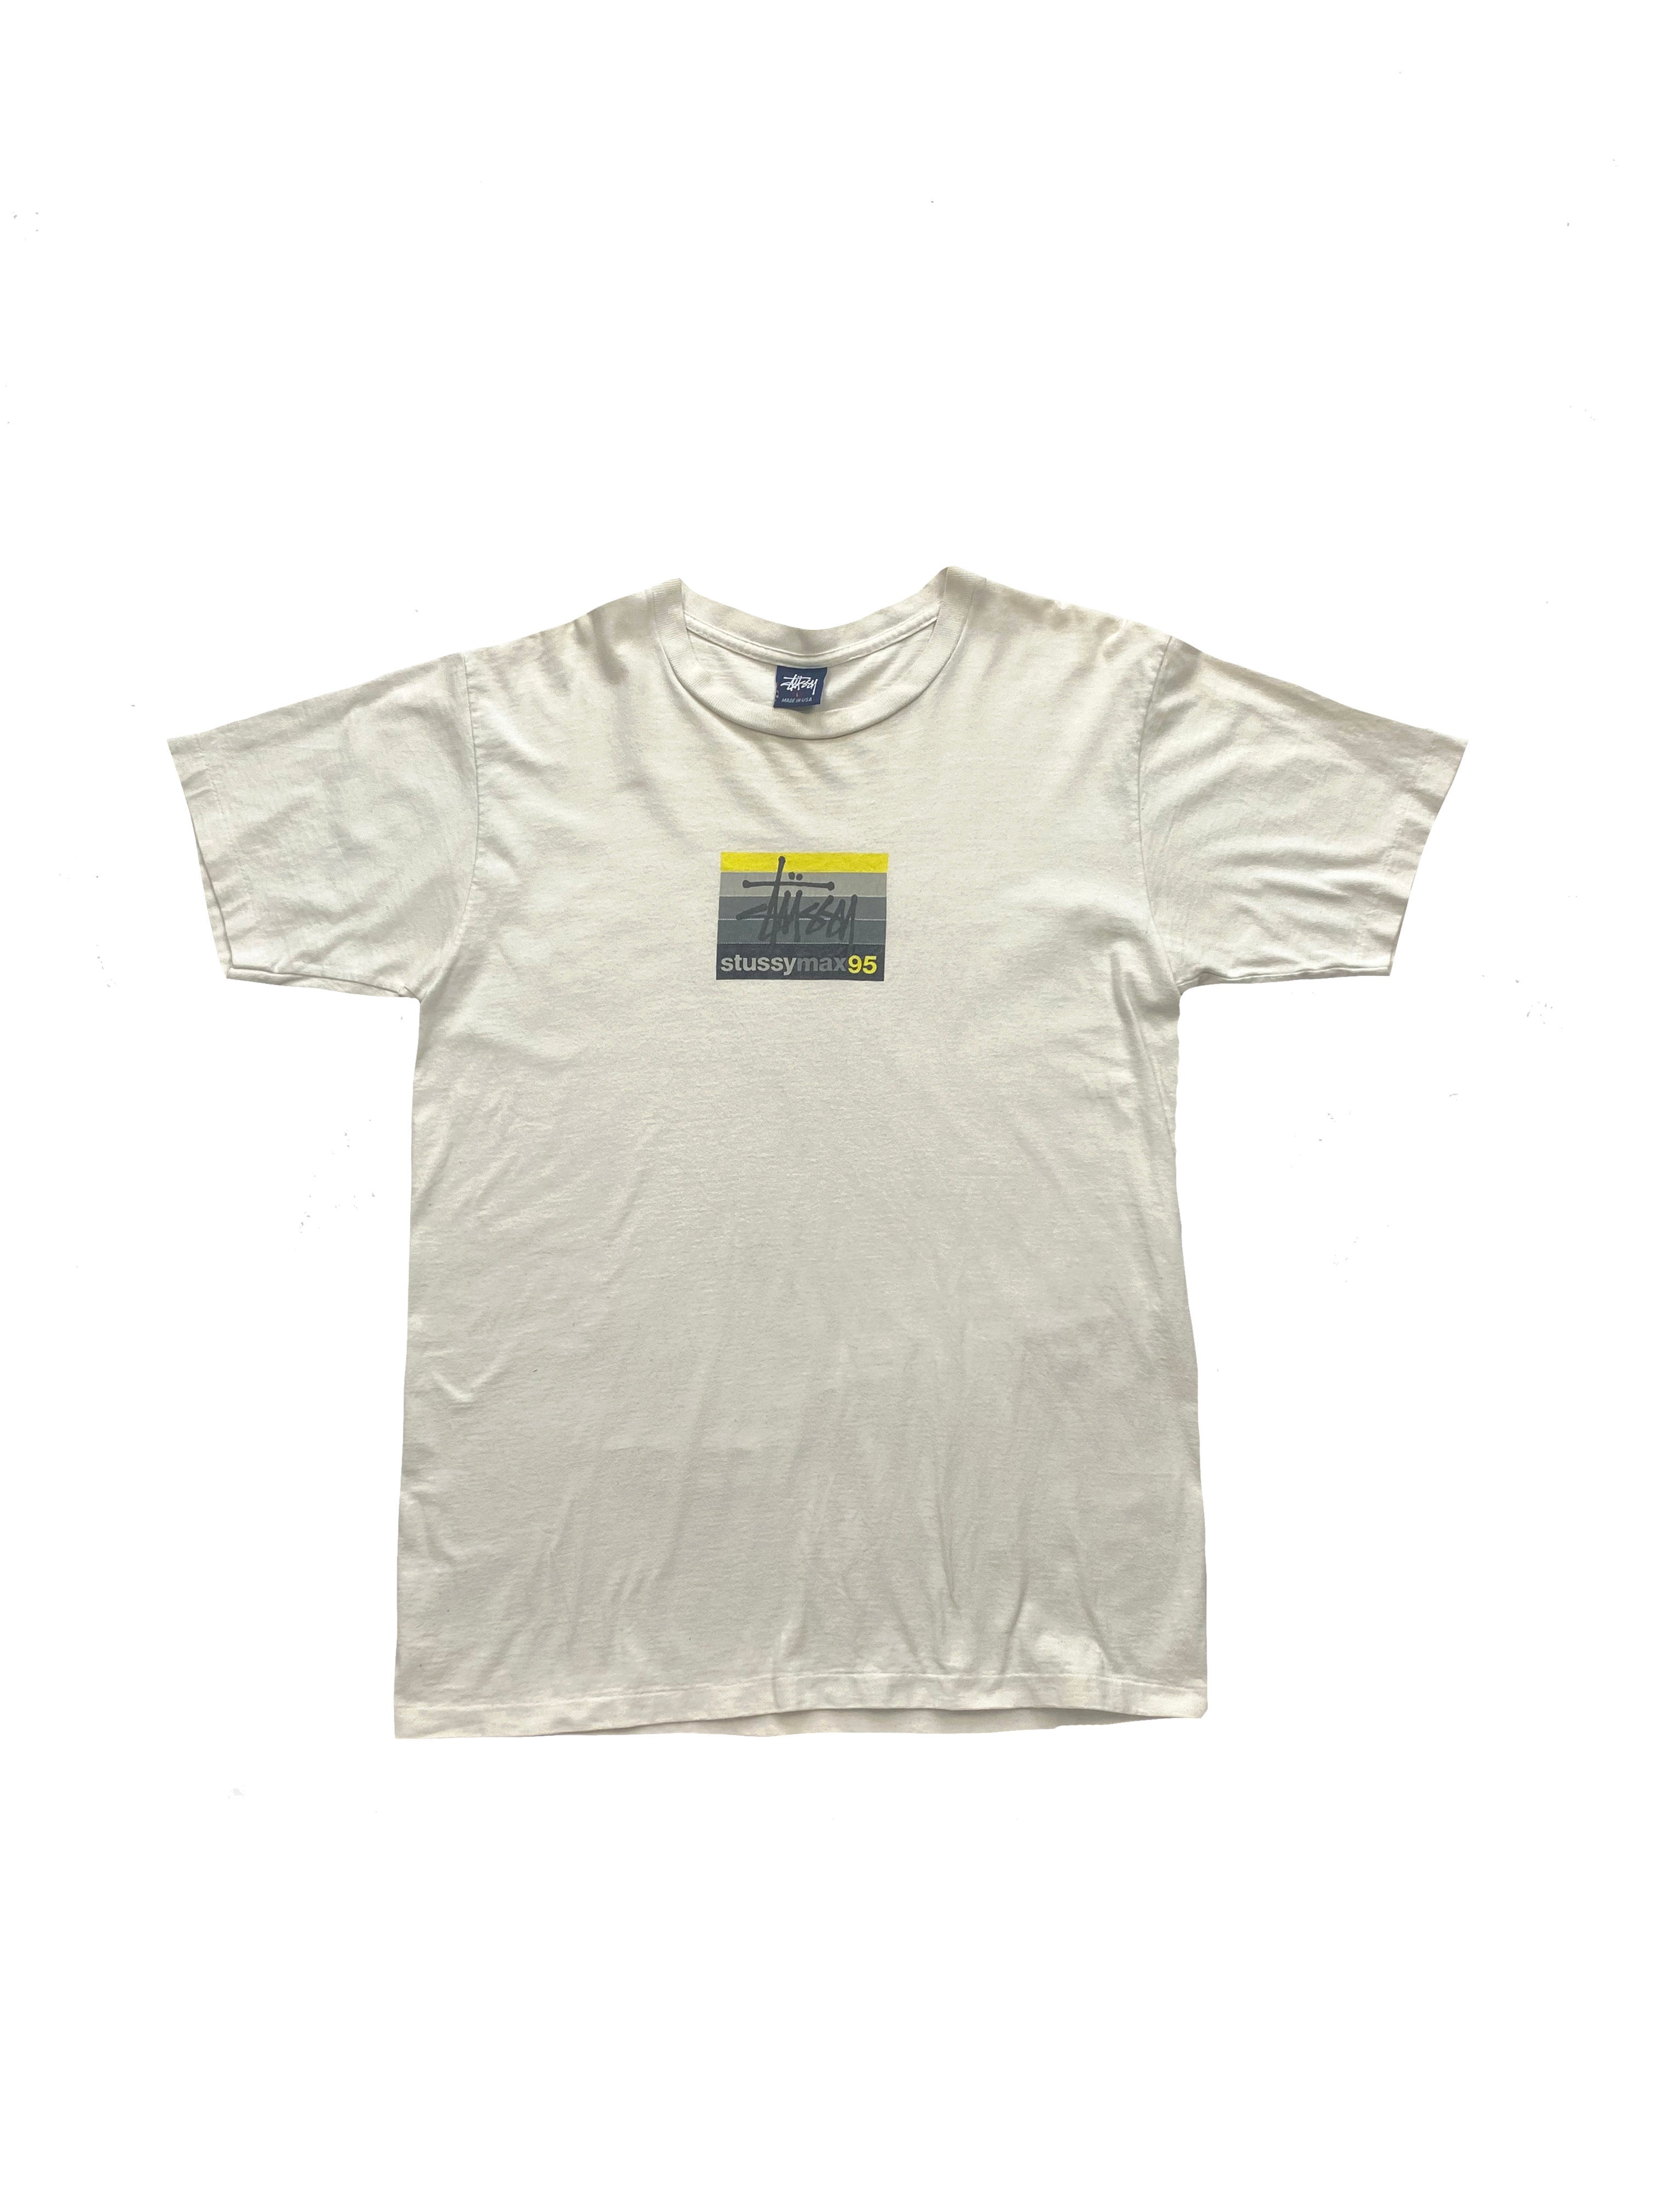 Stussy White Air Max 95 T-shirt 90's